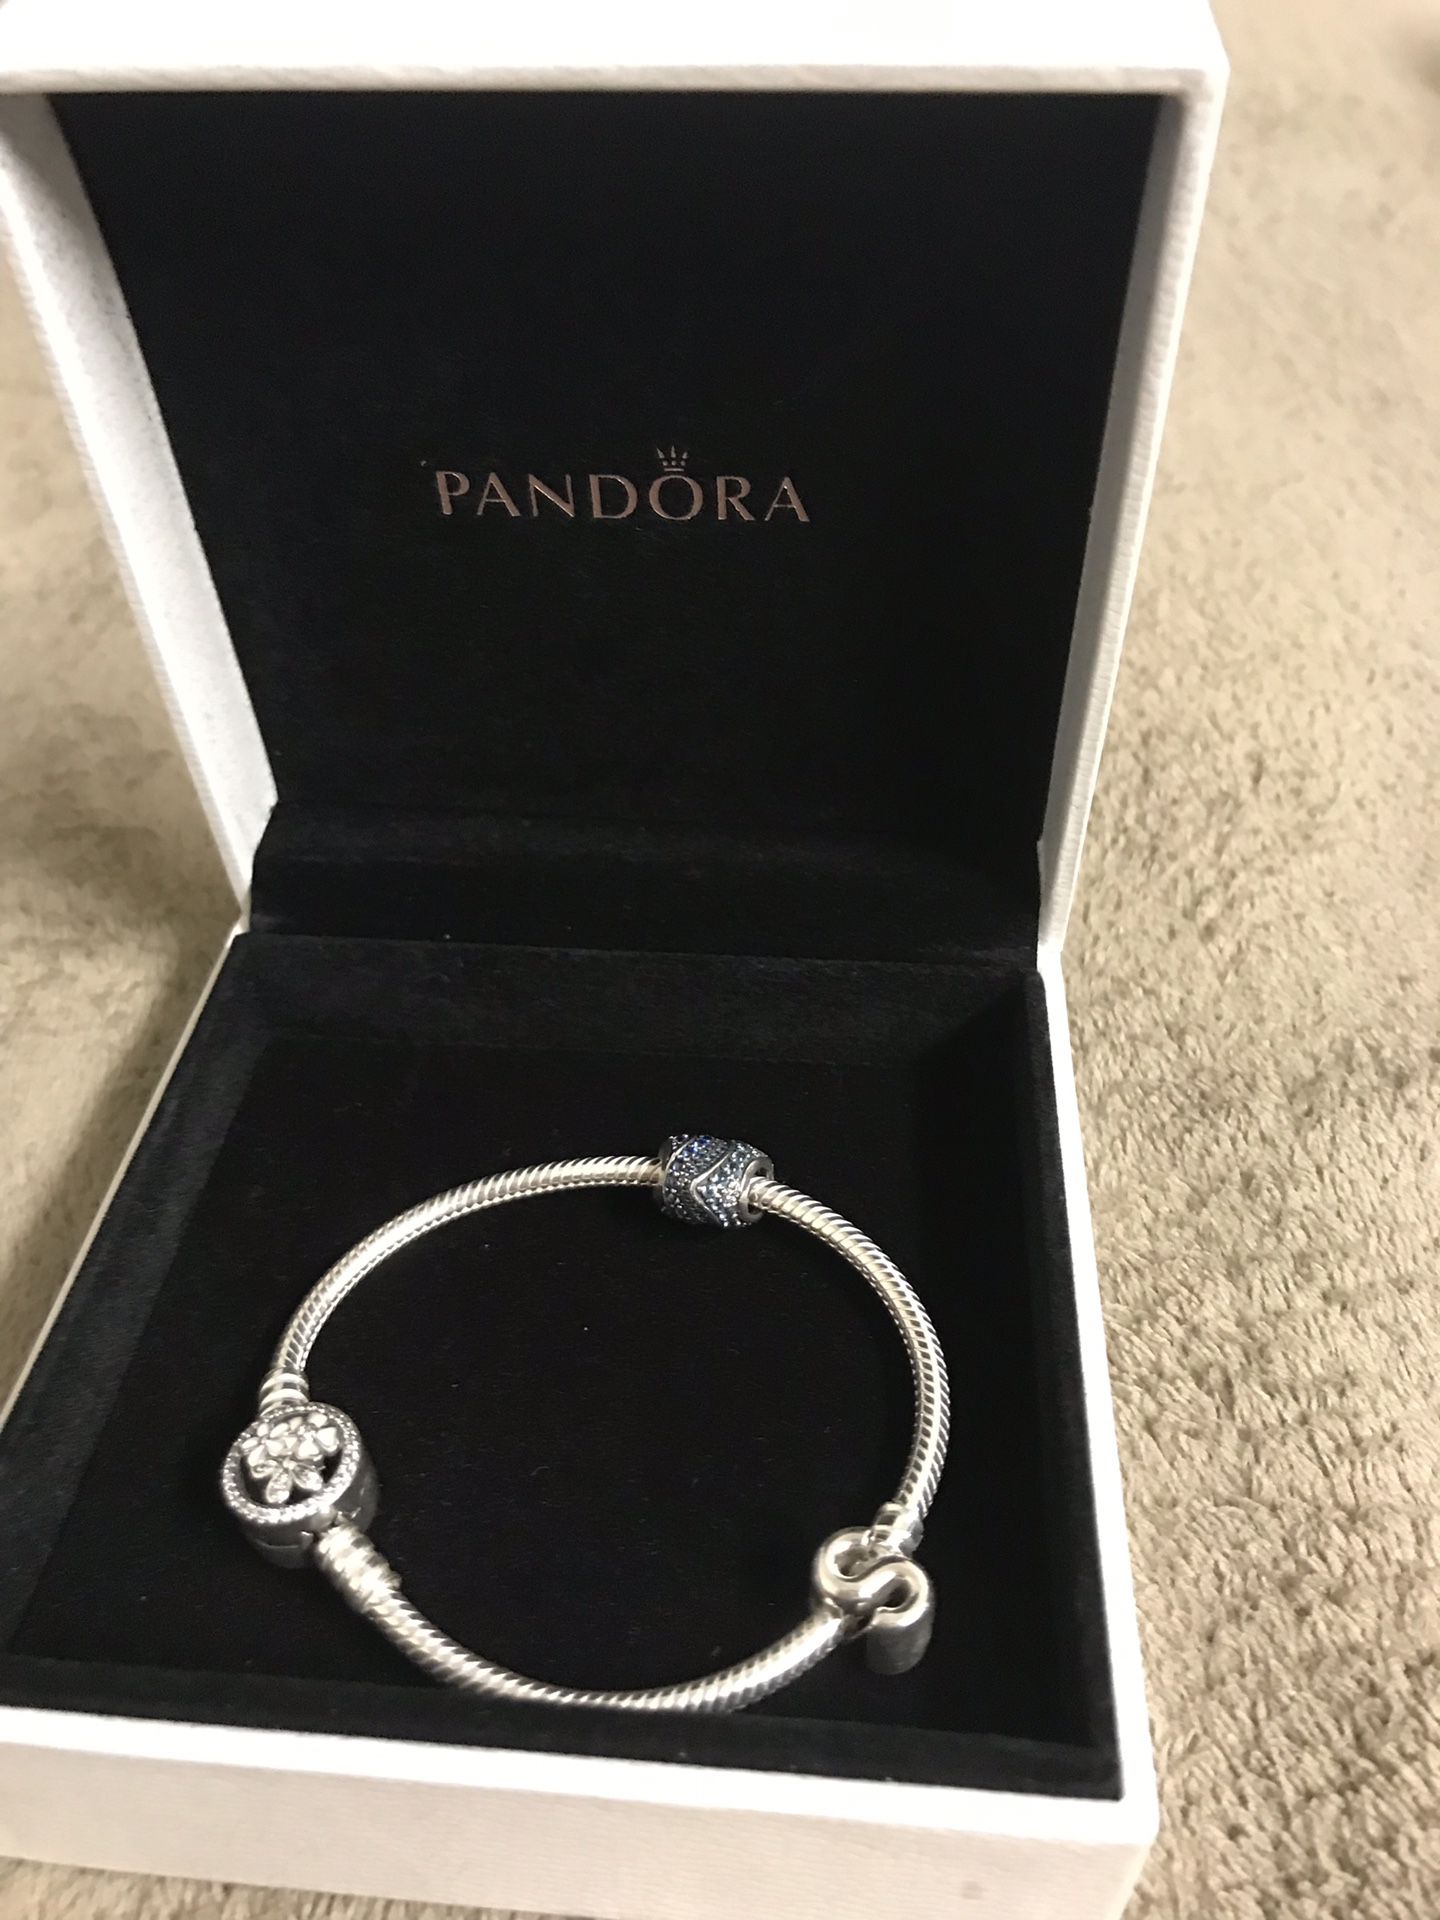 Brand new Pandora Charm bracelet